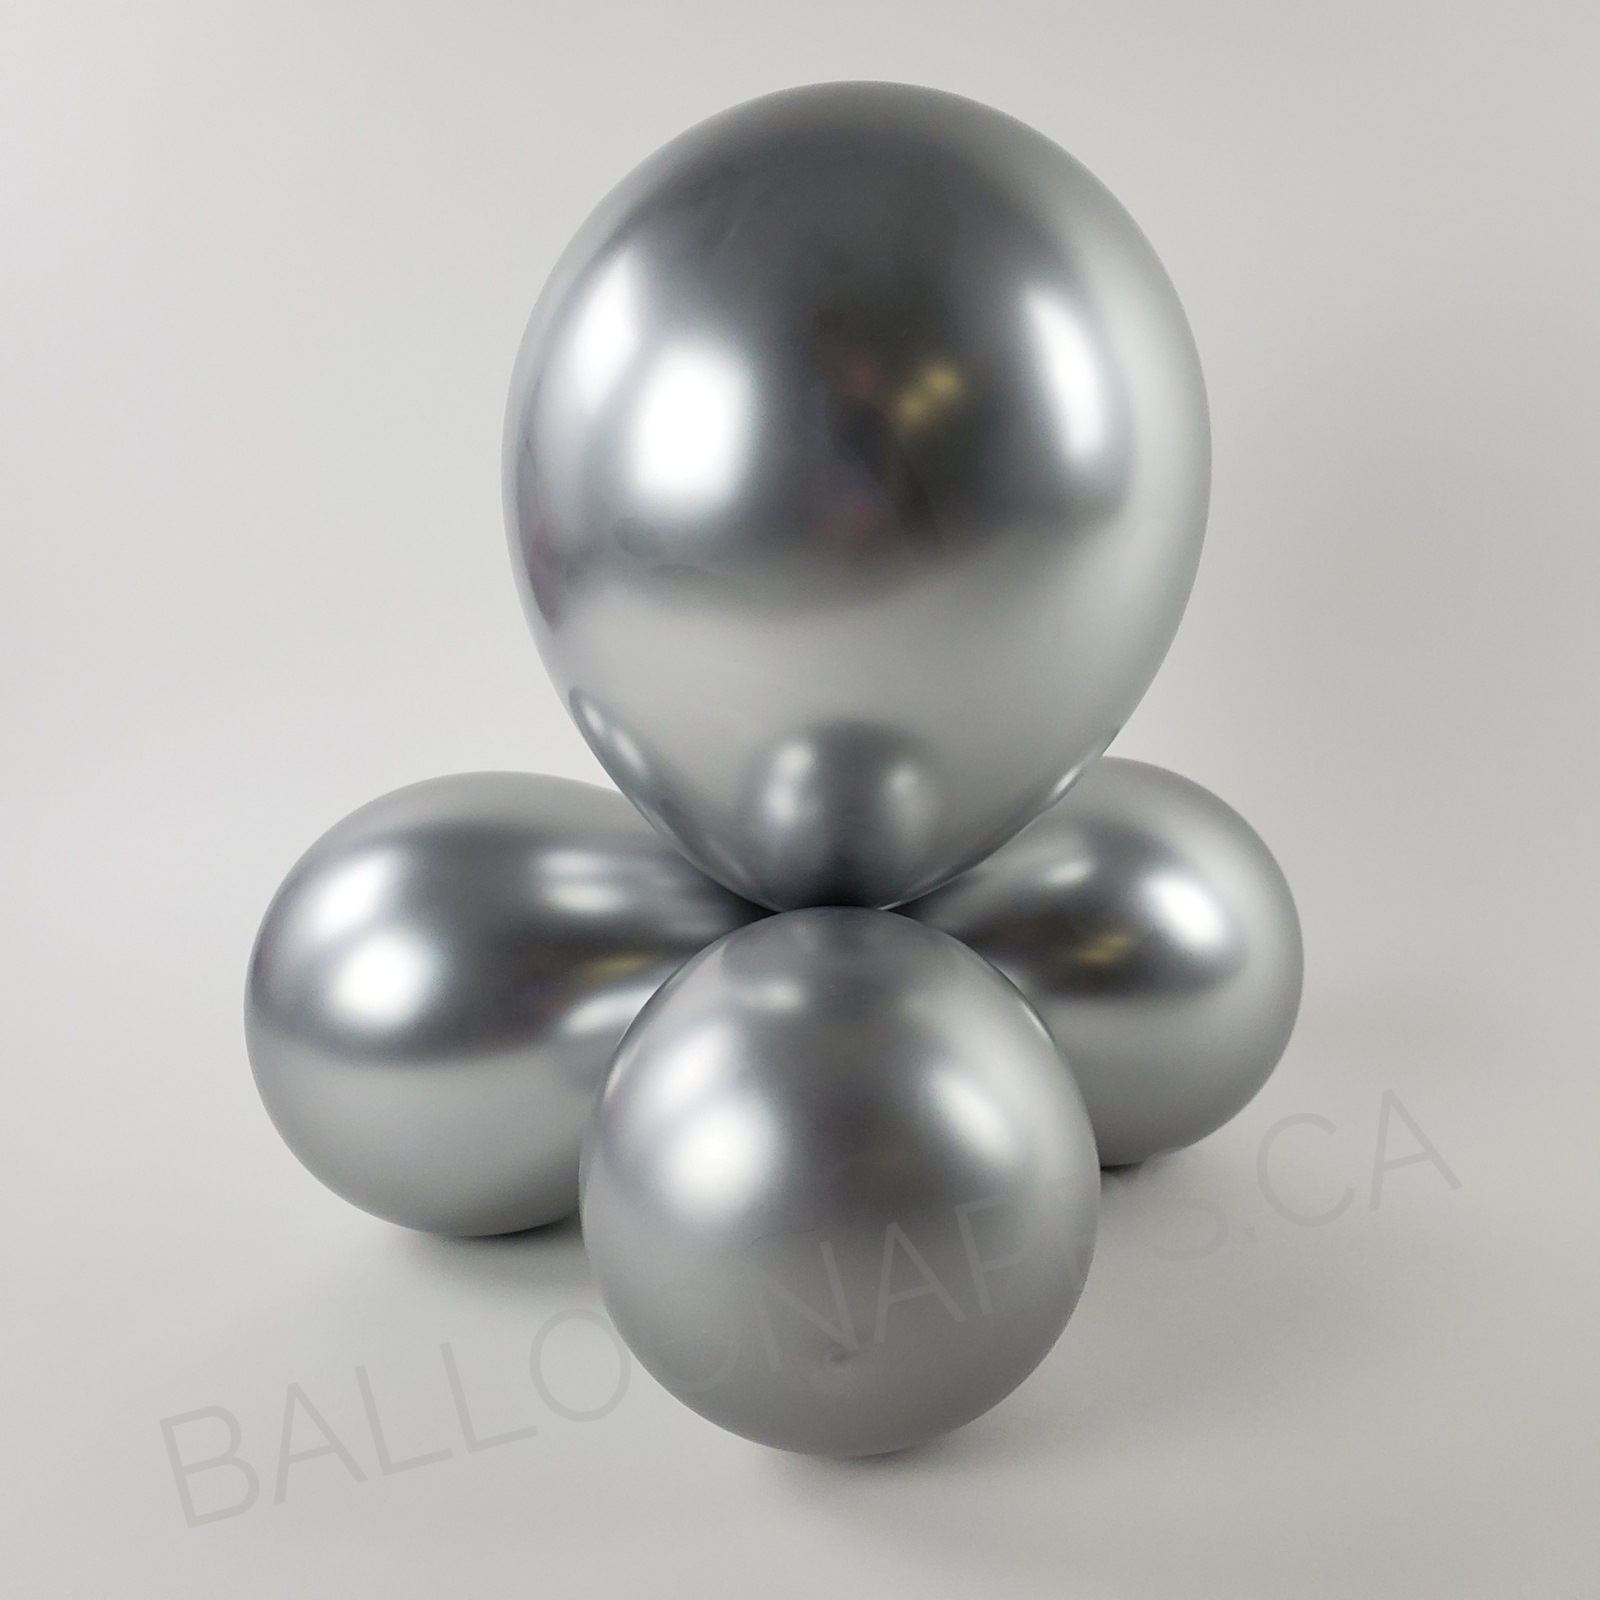 balloon texture SEM (15) 18